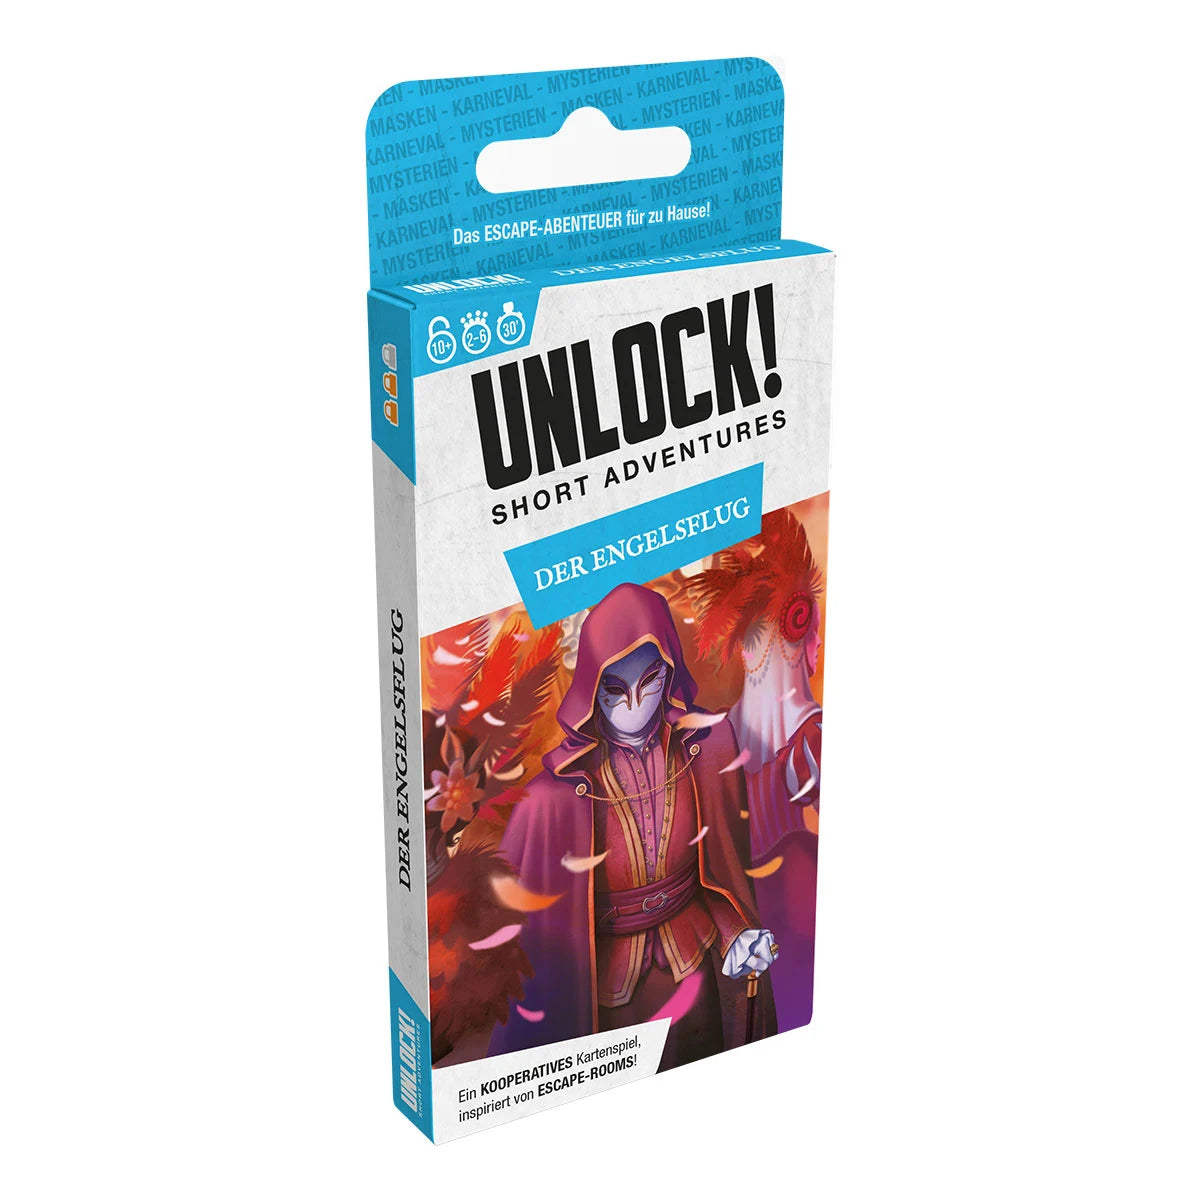 Unlock! - Short Adventures: Der Engelsflug